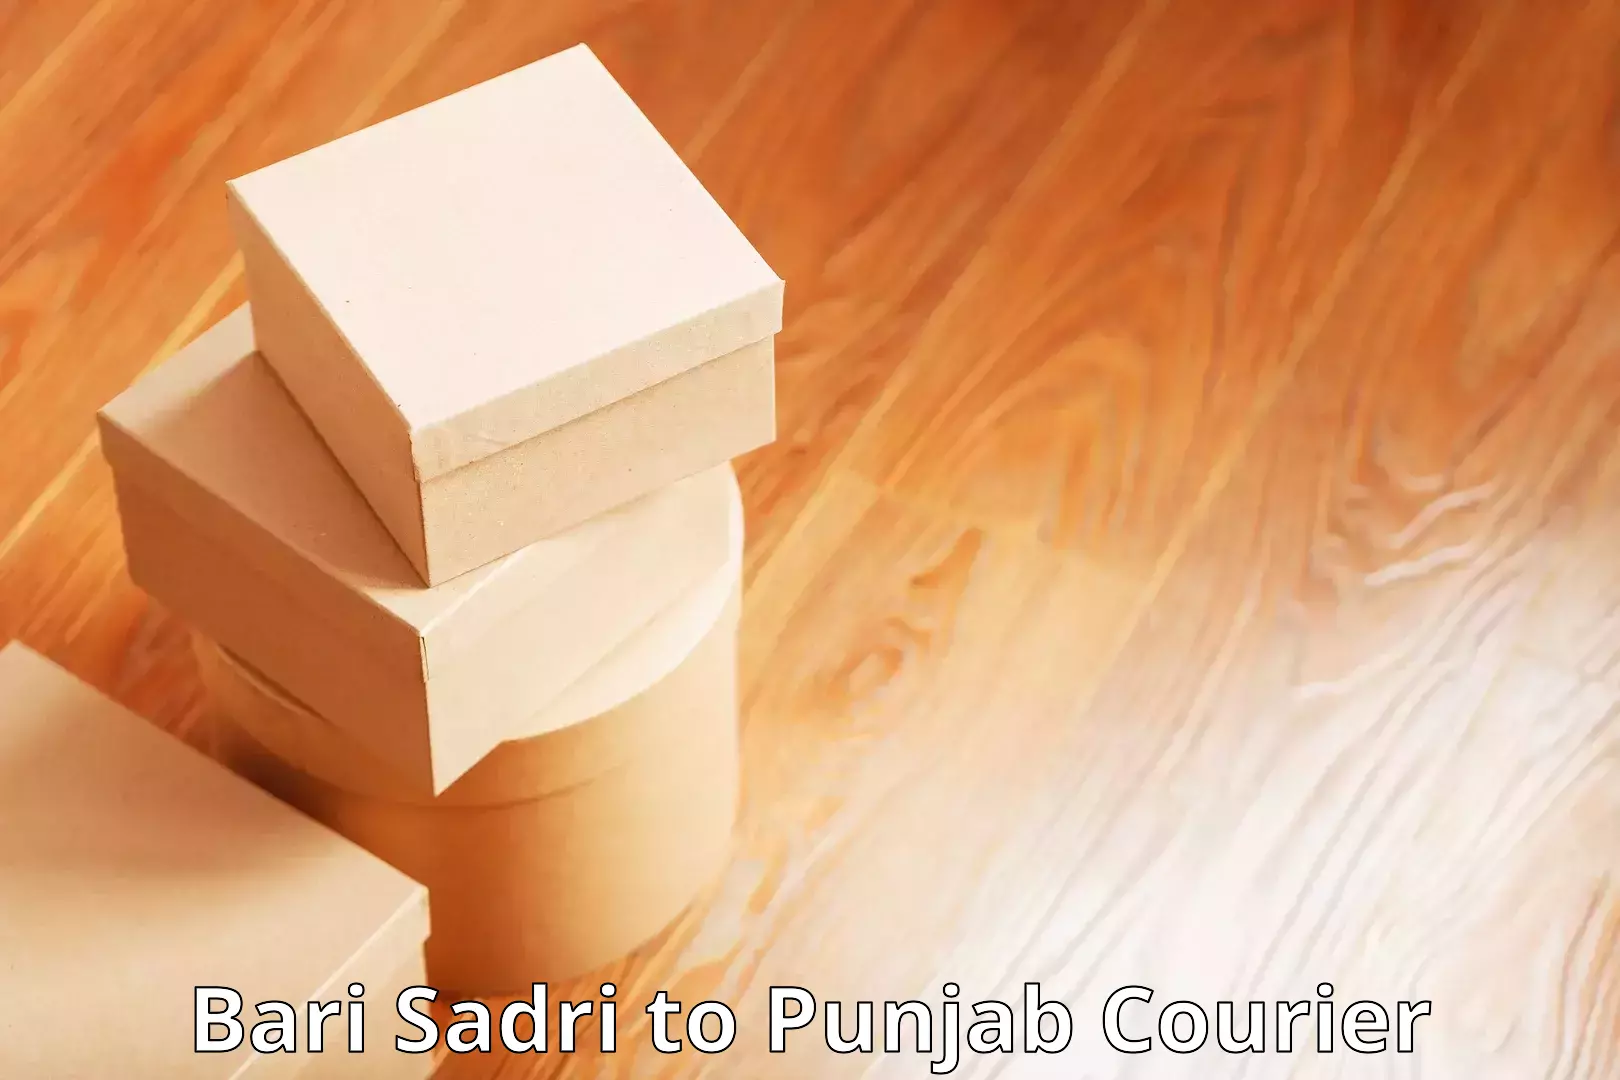 High-performance logistics Bari Sadri to Punjab